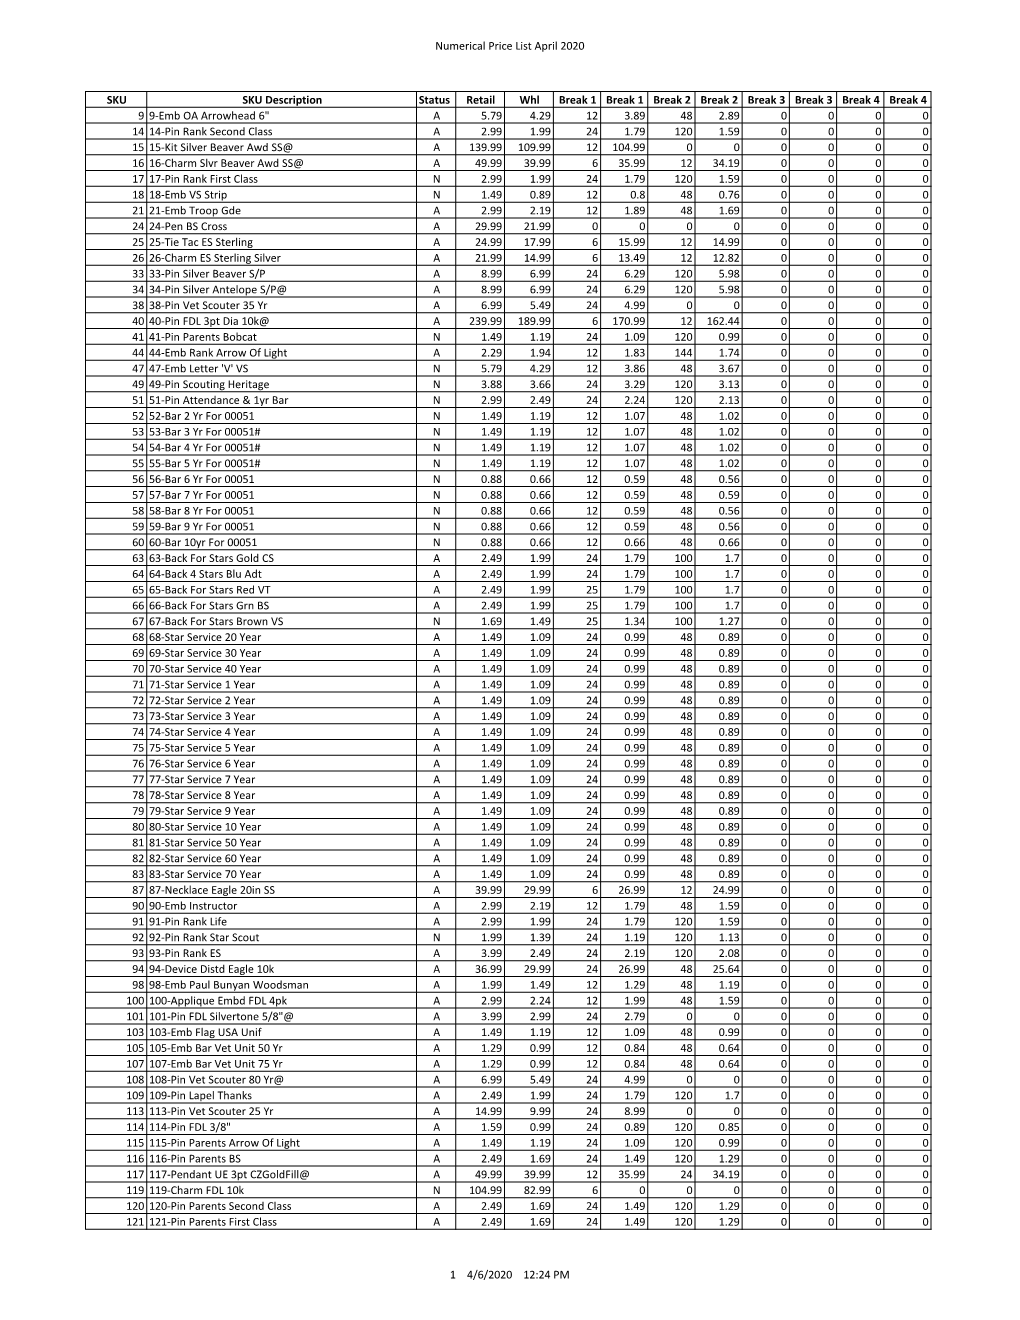 Numerical Price List April 2020 SKU SKU Description Status Retail Whl